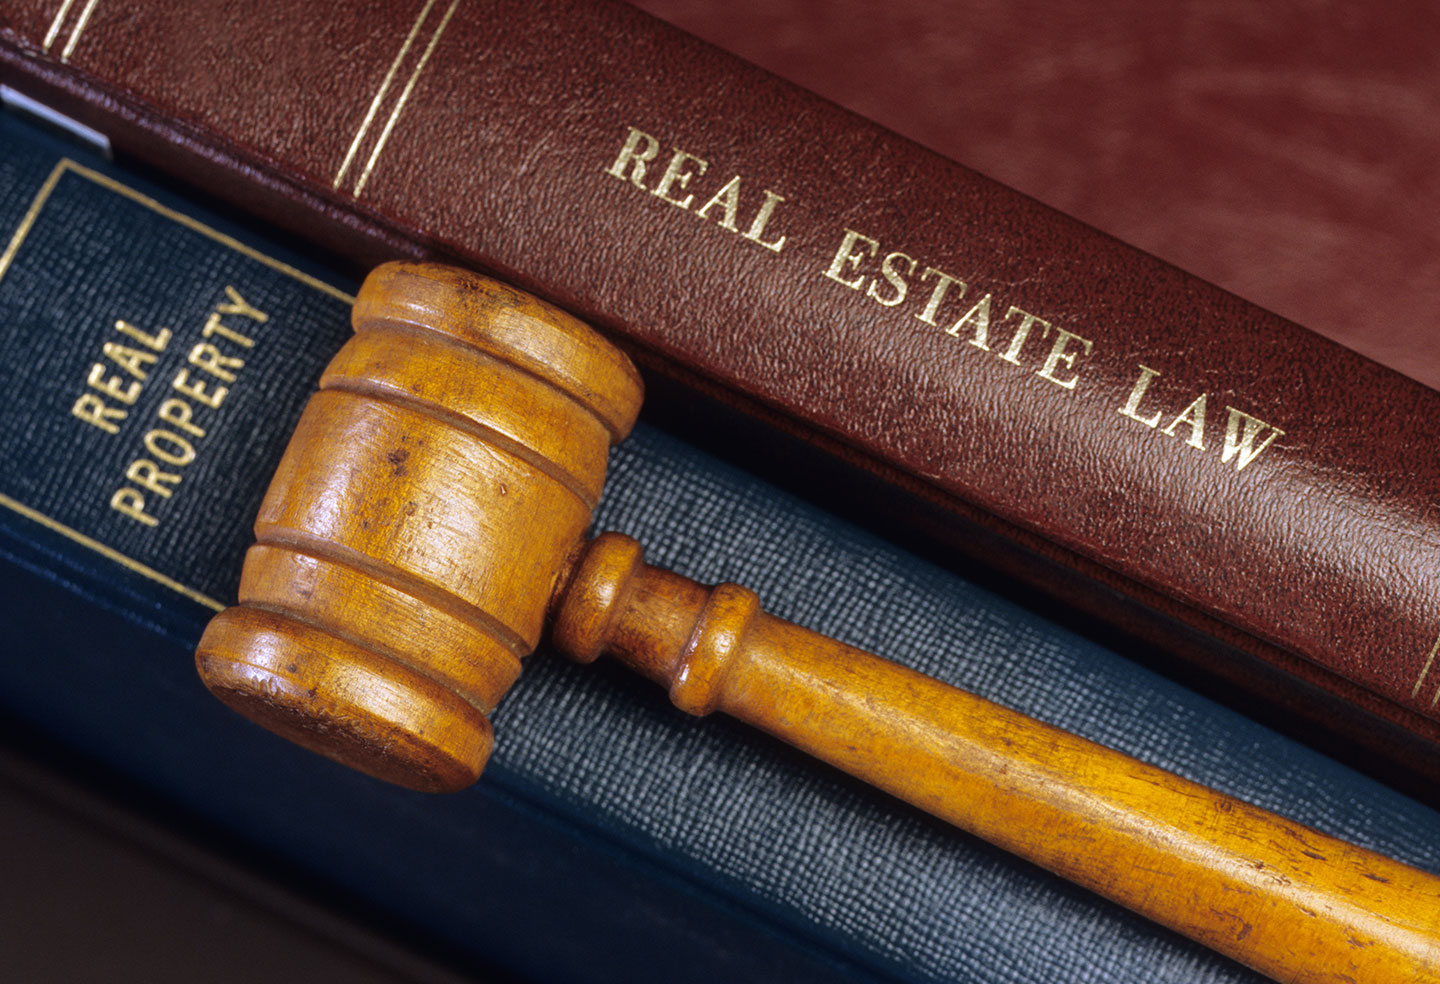 Background hero atmospheric image for Relating to Real Estate - June 2015 Maryland Real Property Legislation